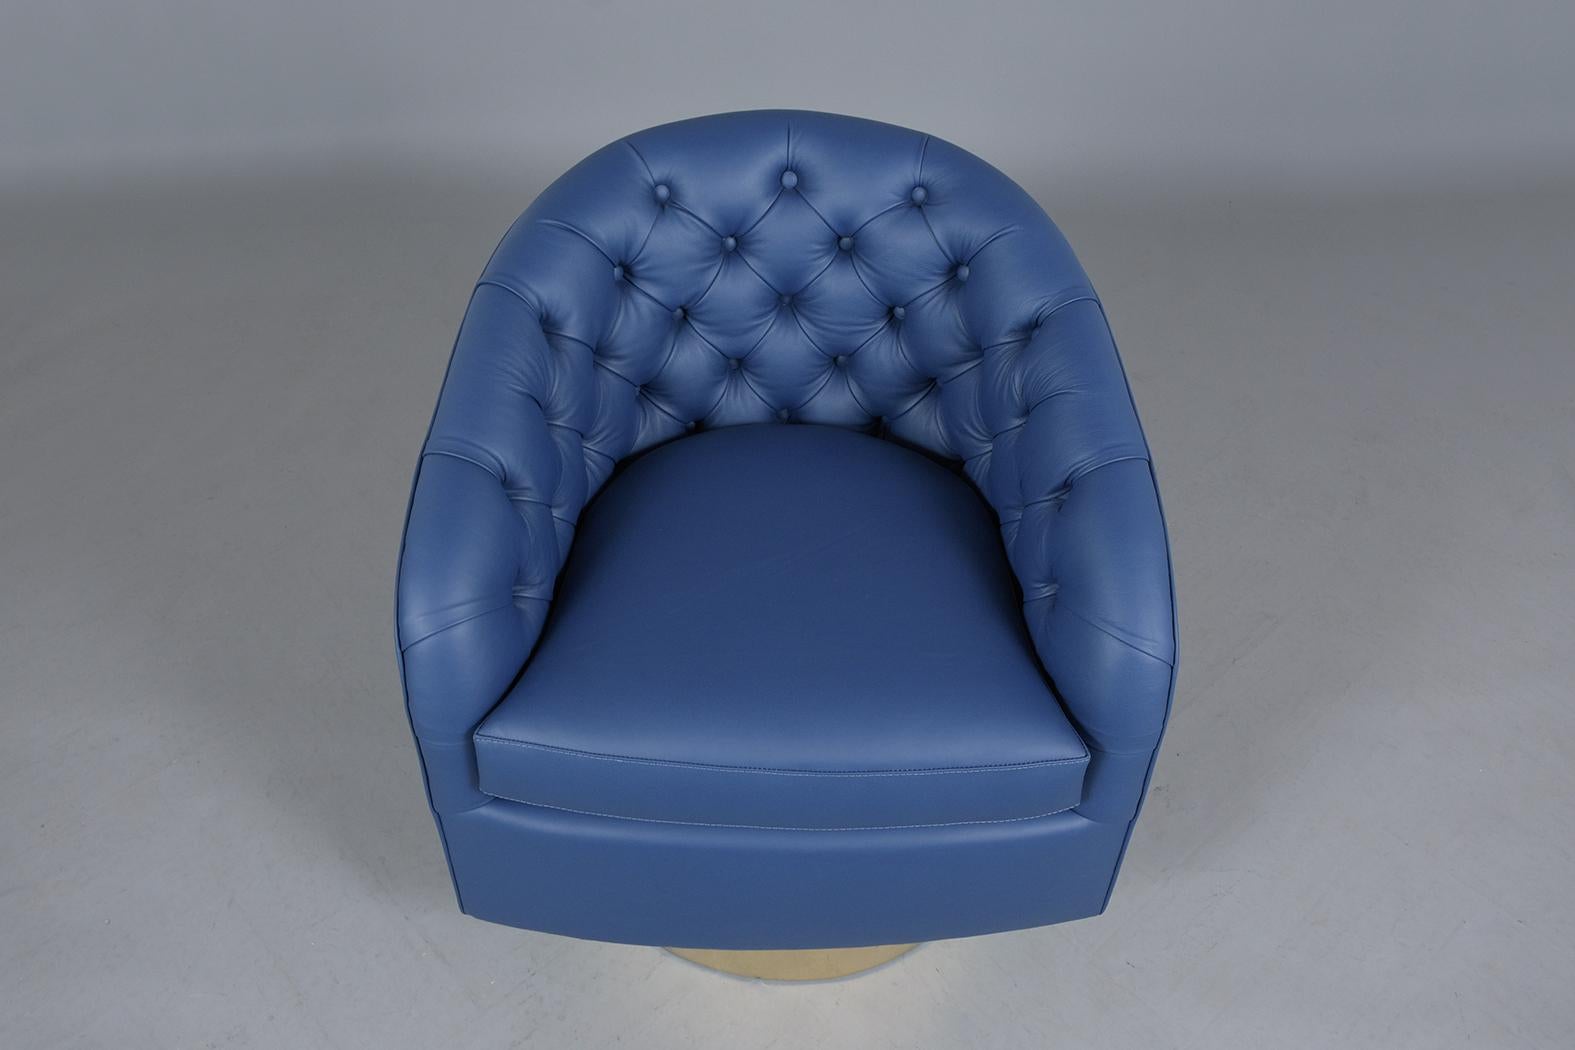 Late 20th Century Milo Baughman-Inspired Vintage Brass Swivel Chairs: Mid-Century Elegance